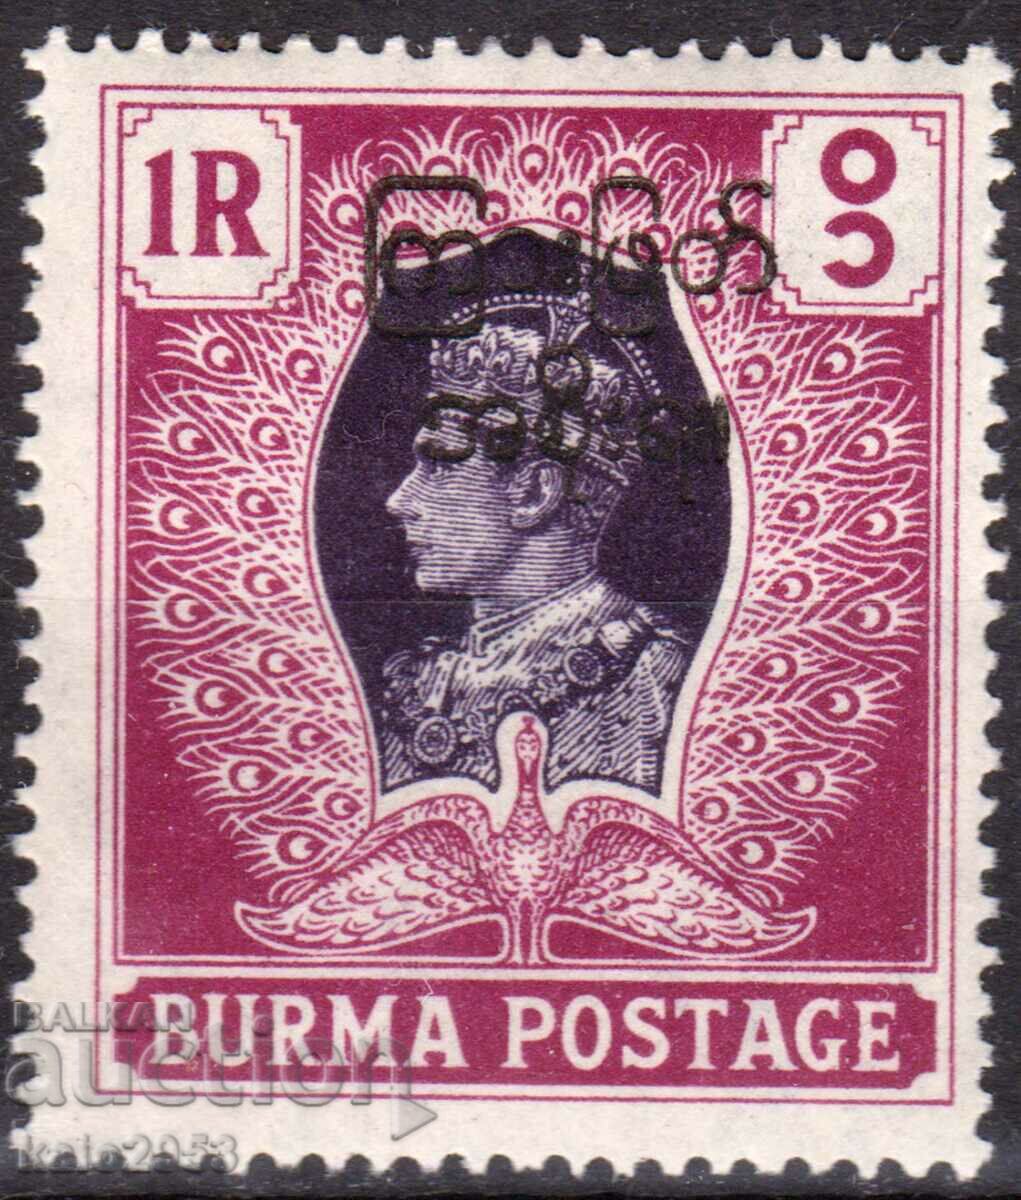 GB/Burma-1946-Regular-KG V,Sgt.Int.Government-MLH